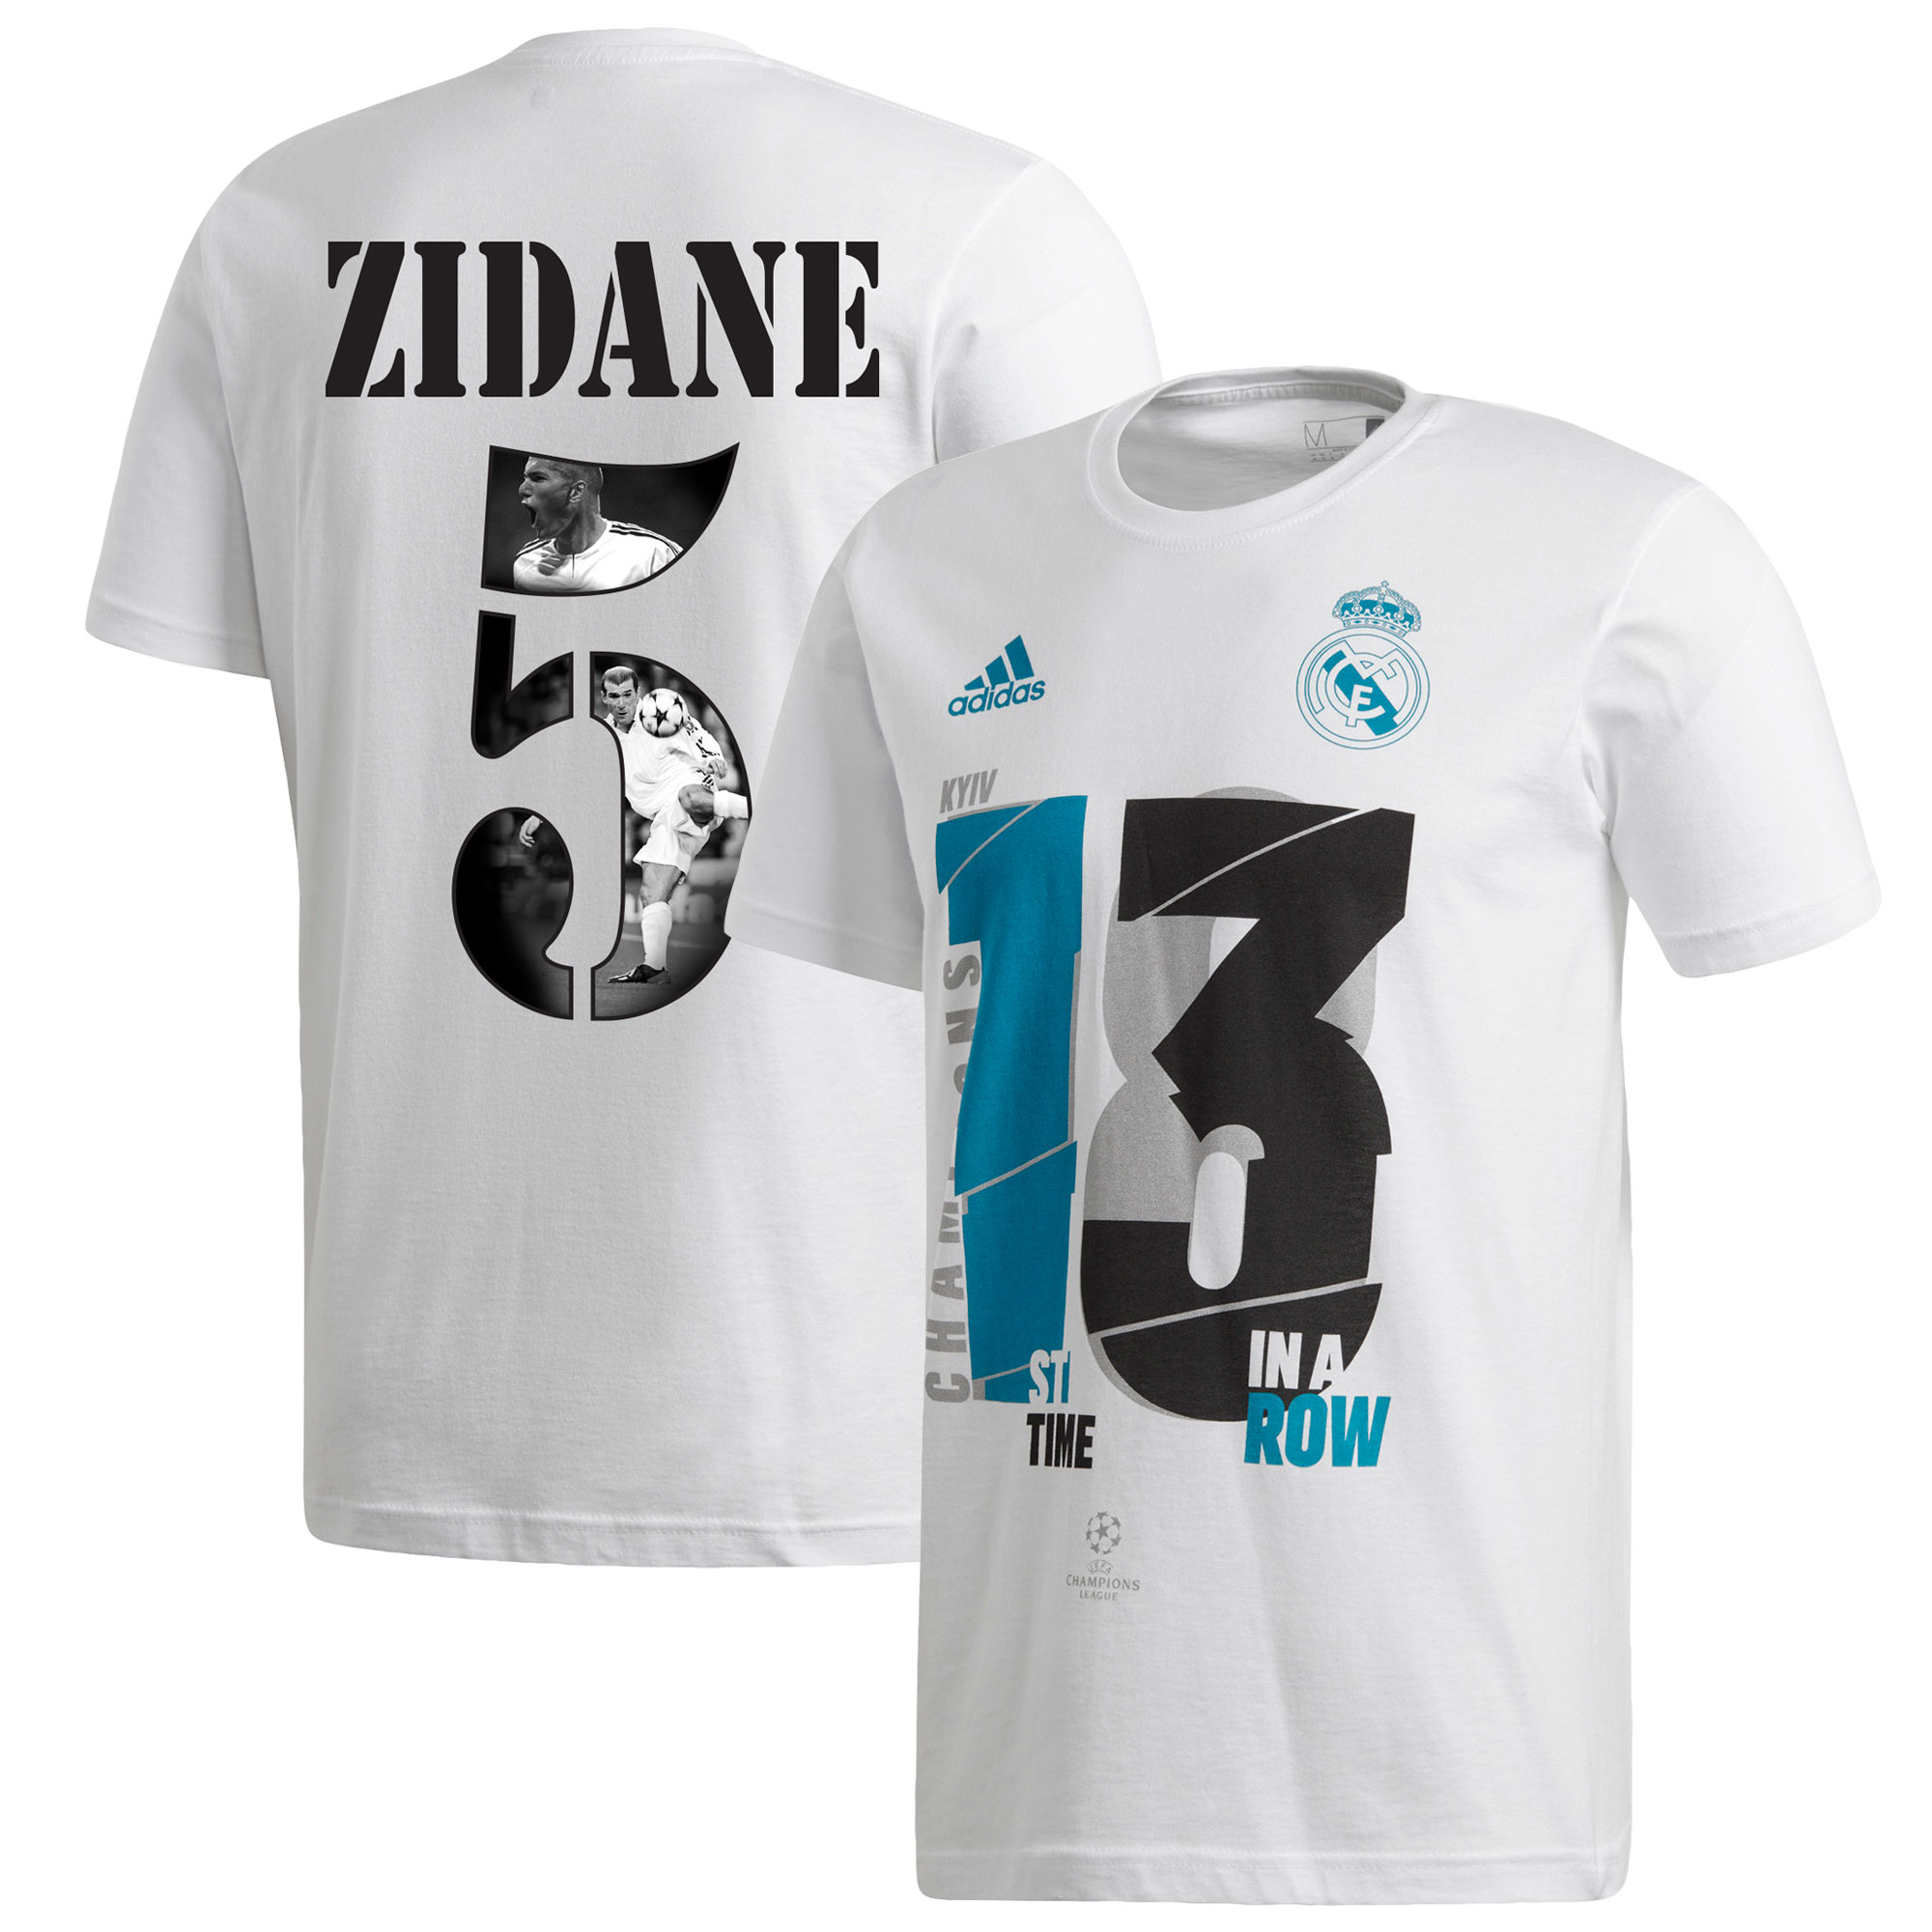 Real Madrid Champions League 2018 adidas Winners T-Shirt + Zidane 5 (Gallery style) 62